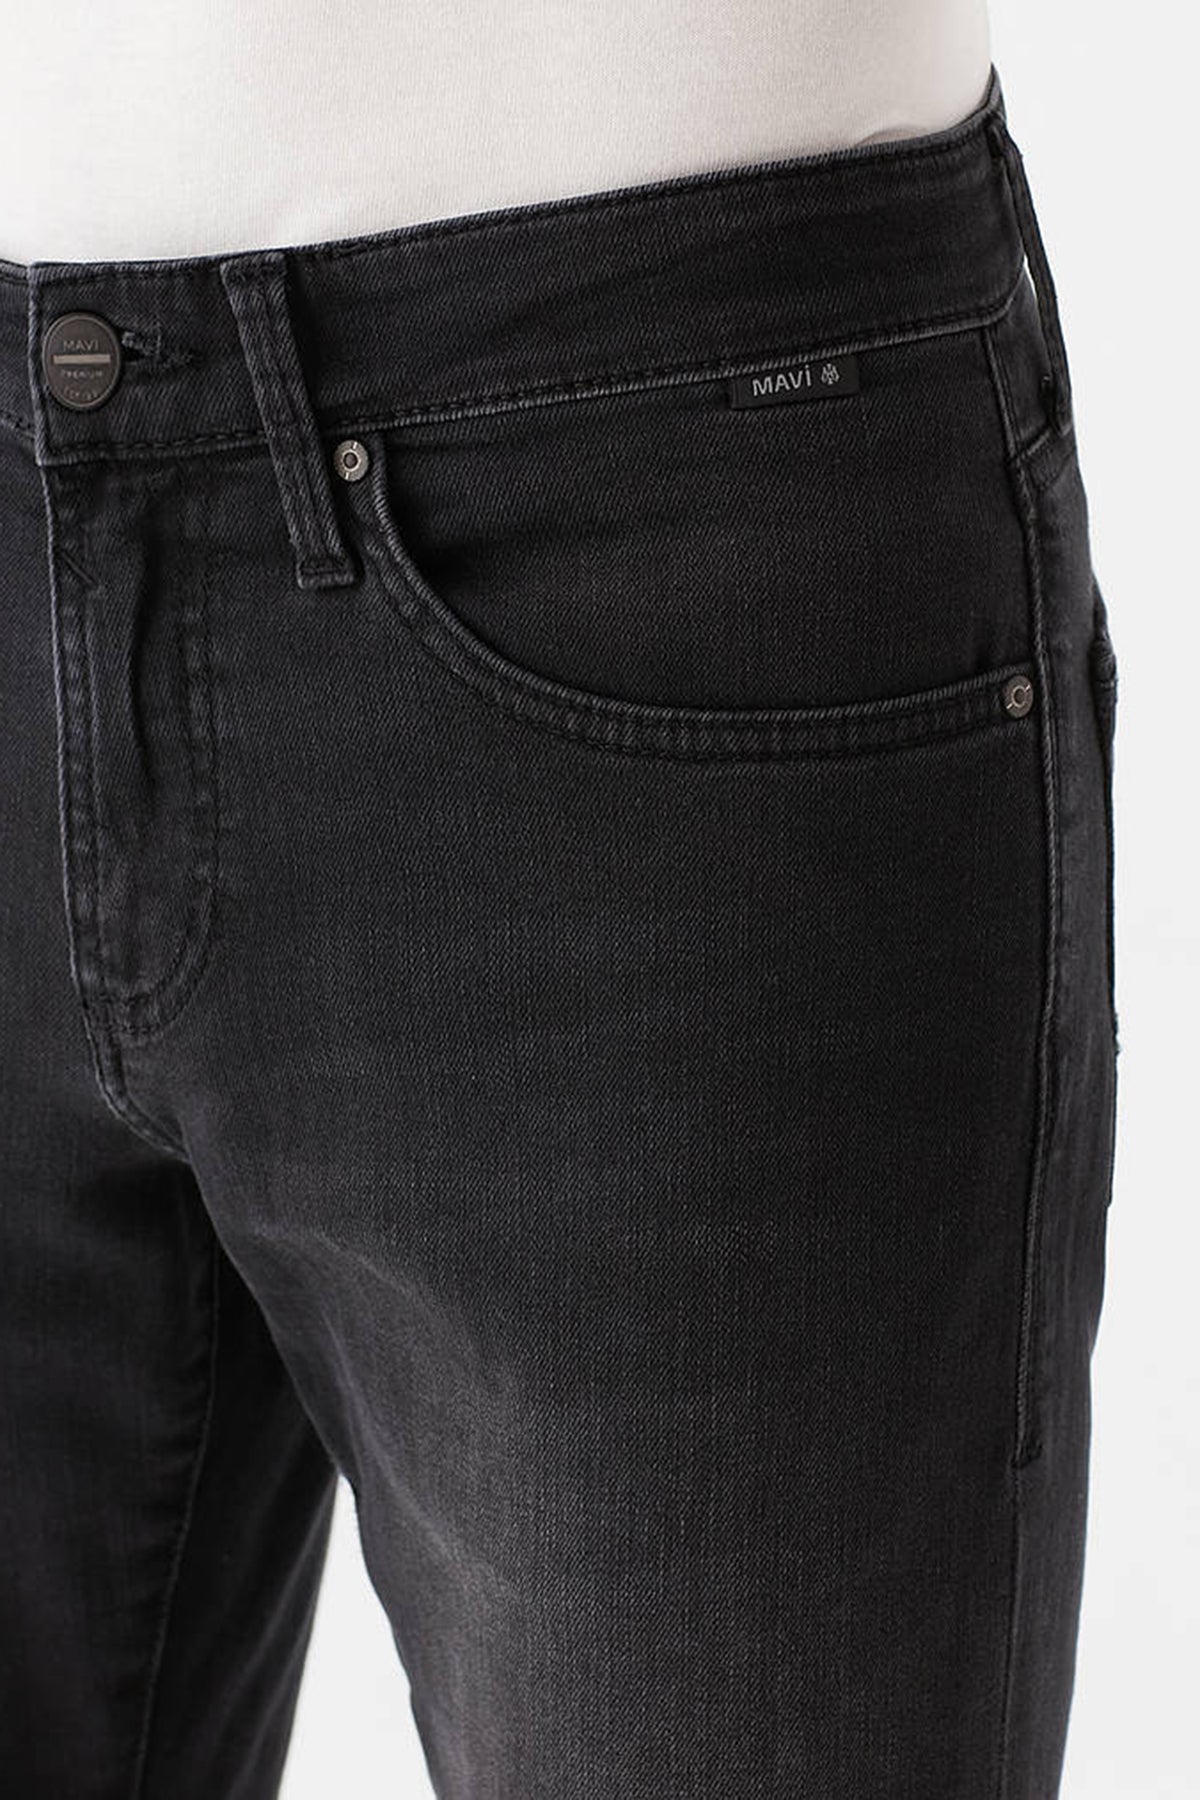 Mavi Hunter Pamuklu Rahat Kesim Düz Paça Jeans Erkek Kot Pantolon 0020218775 KOYU GRİ